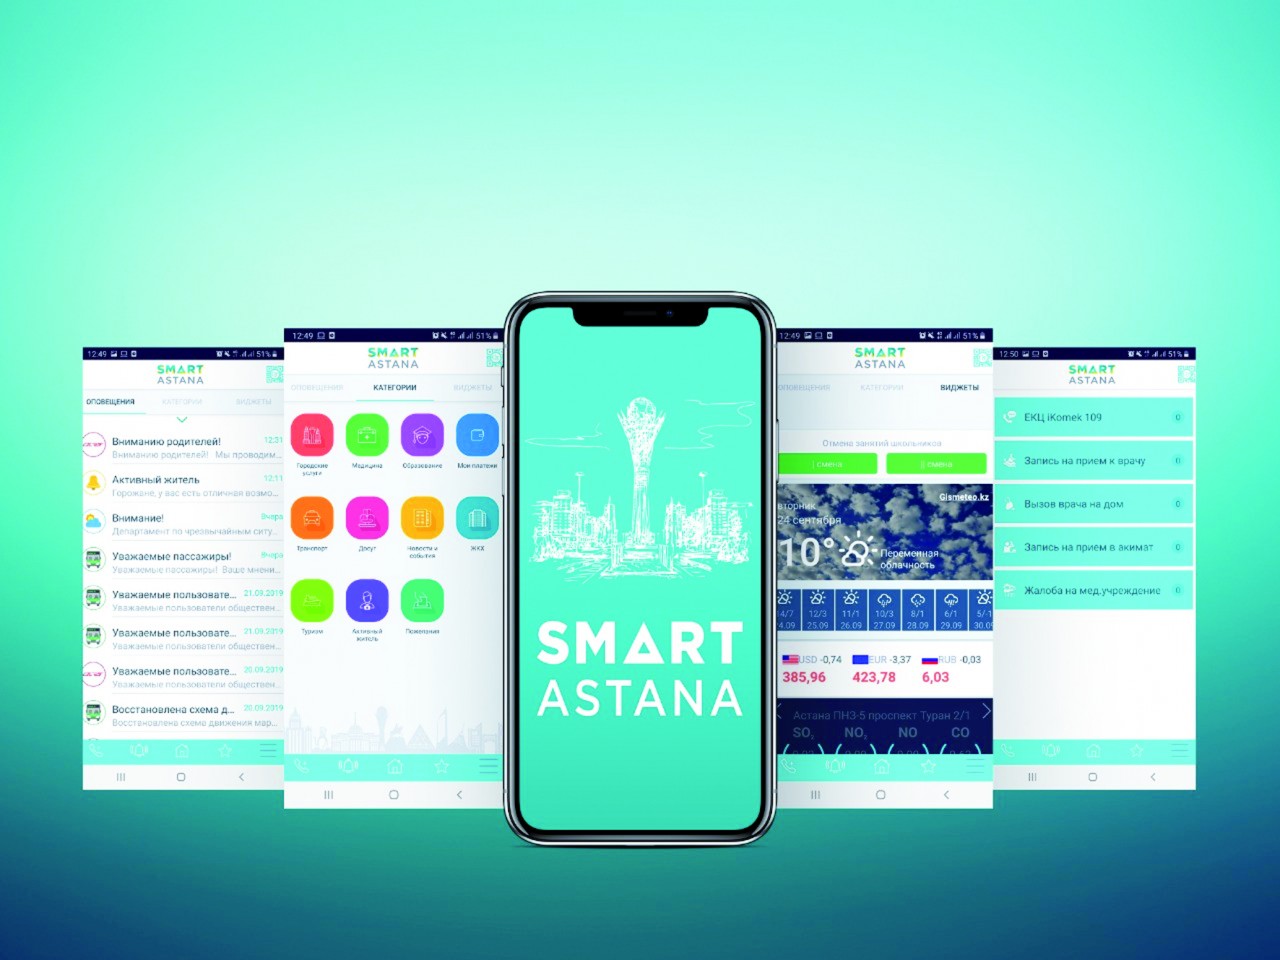 Смарт астан. Smart Astana. Smart Astana концепция. Smart Astana статистика. Smart Astana реализация 2022 года.